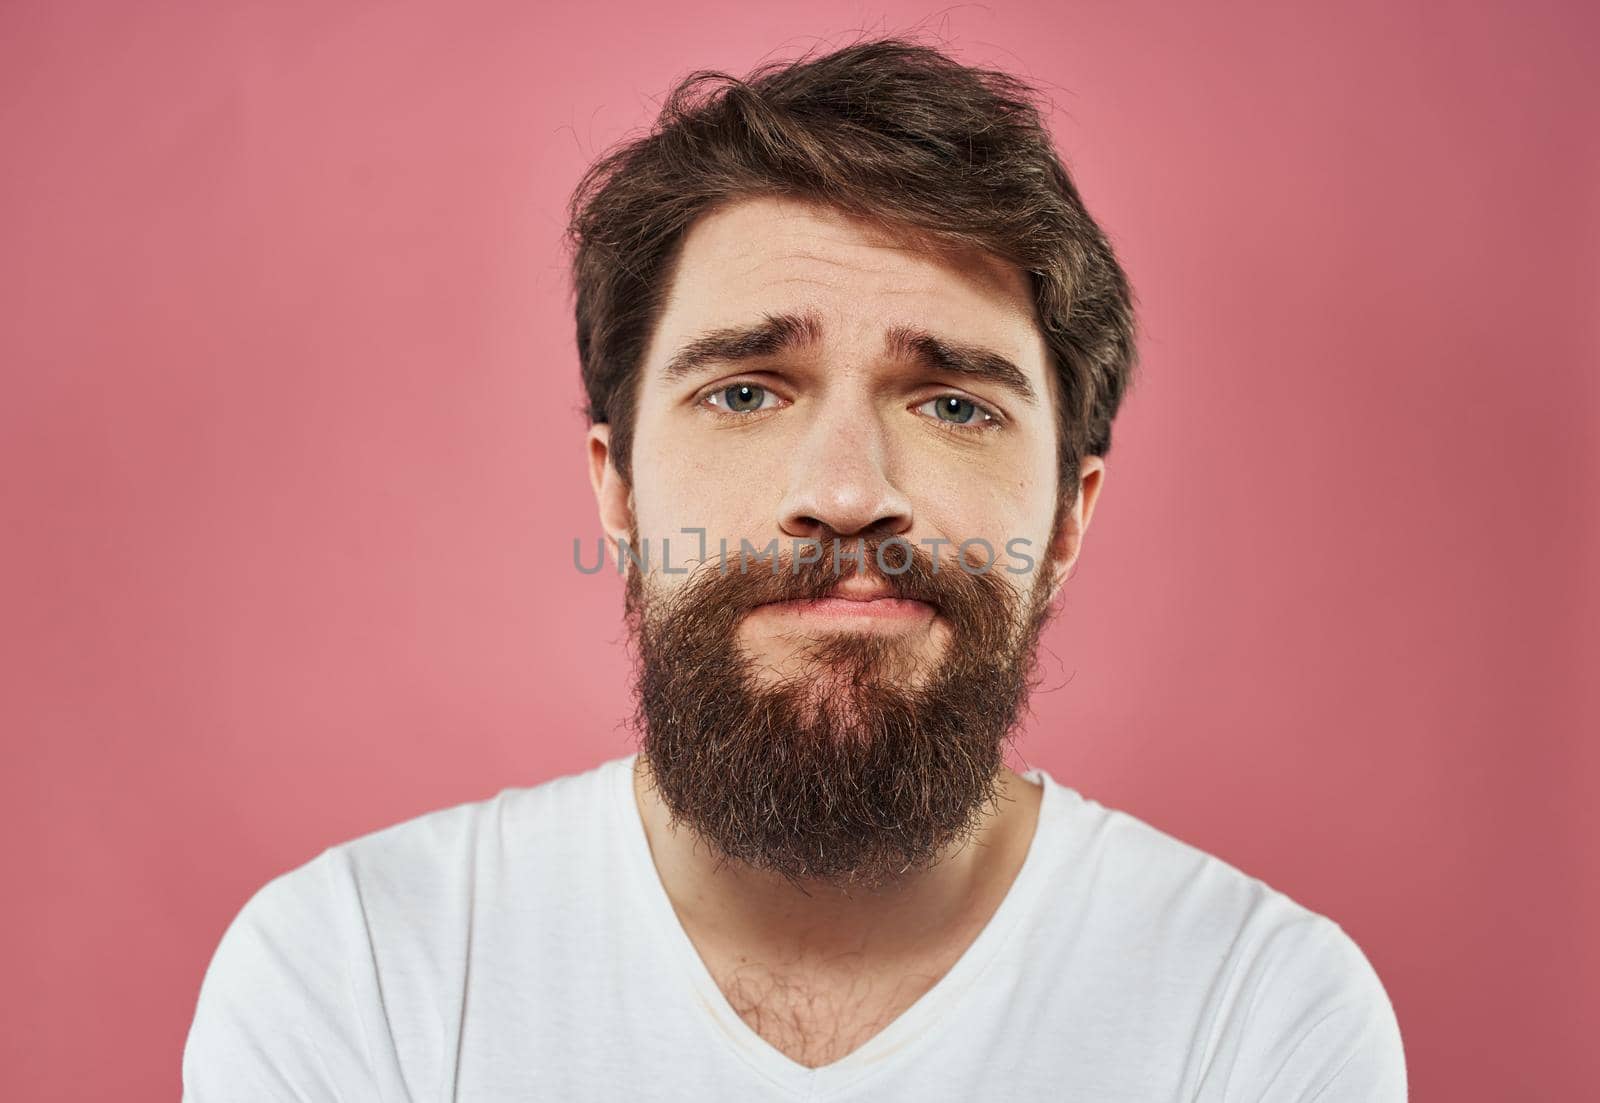 Male cropped view portrait of brunet bushy beard white t-shirt by SHOTPRIME